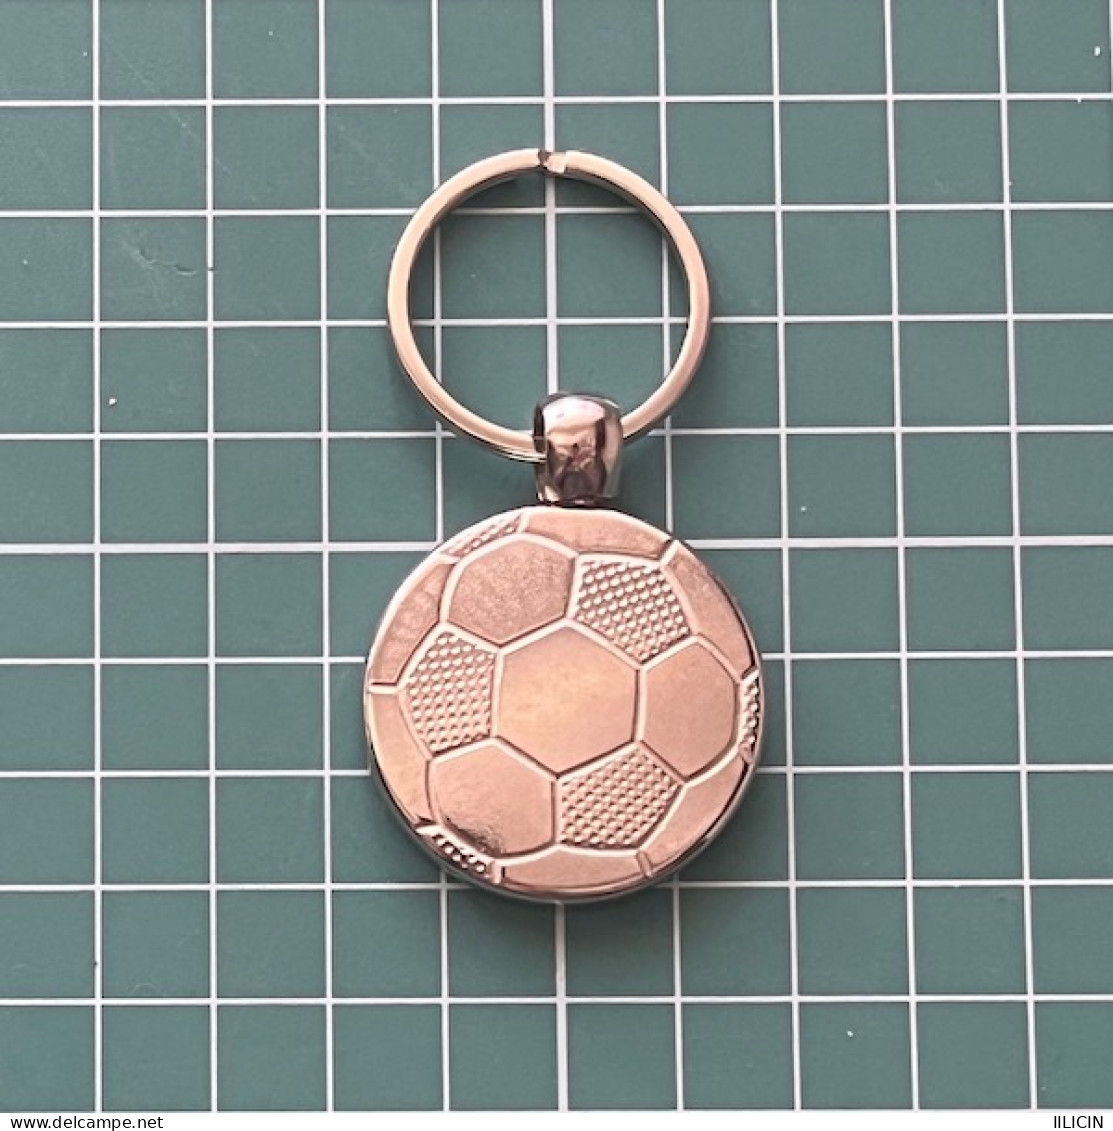 Pendant Keychain Souvenir SU000247 - Football Soccer Scotland Annan Athletic - Bekleidung, Souvenirs Und Sonstige